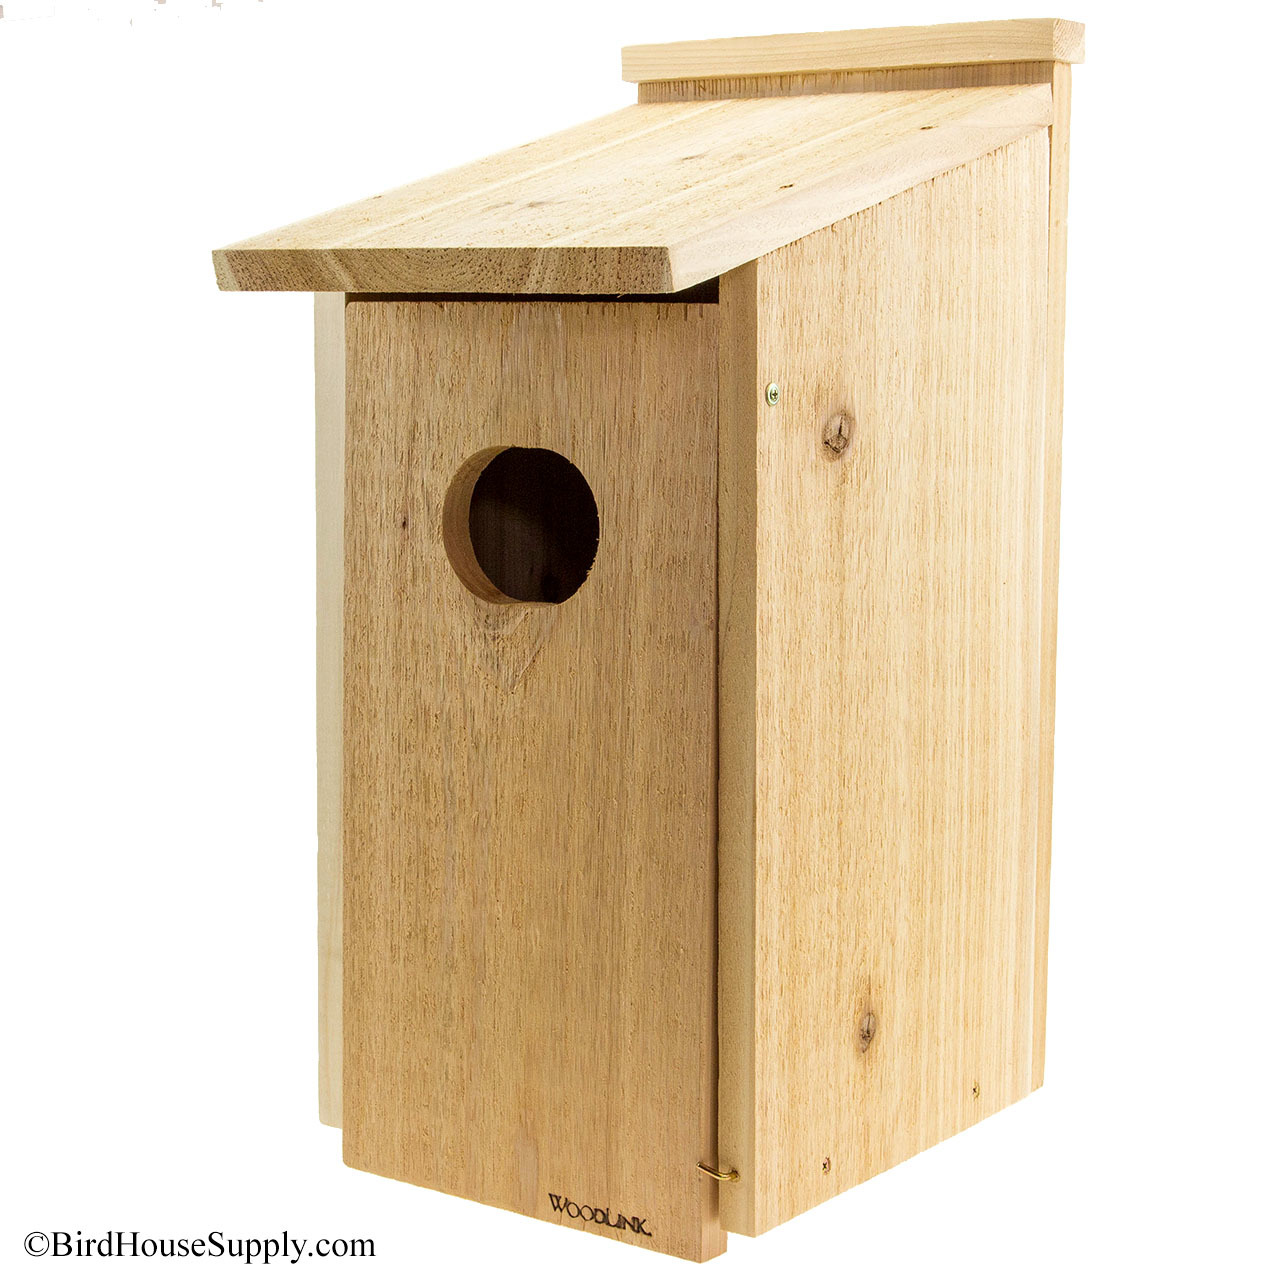 Woodlink Cedar Wood Duck Box birdhousesupply.com